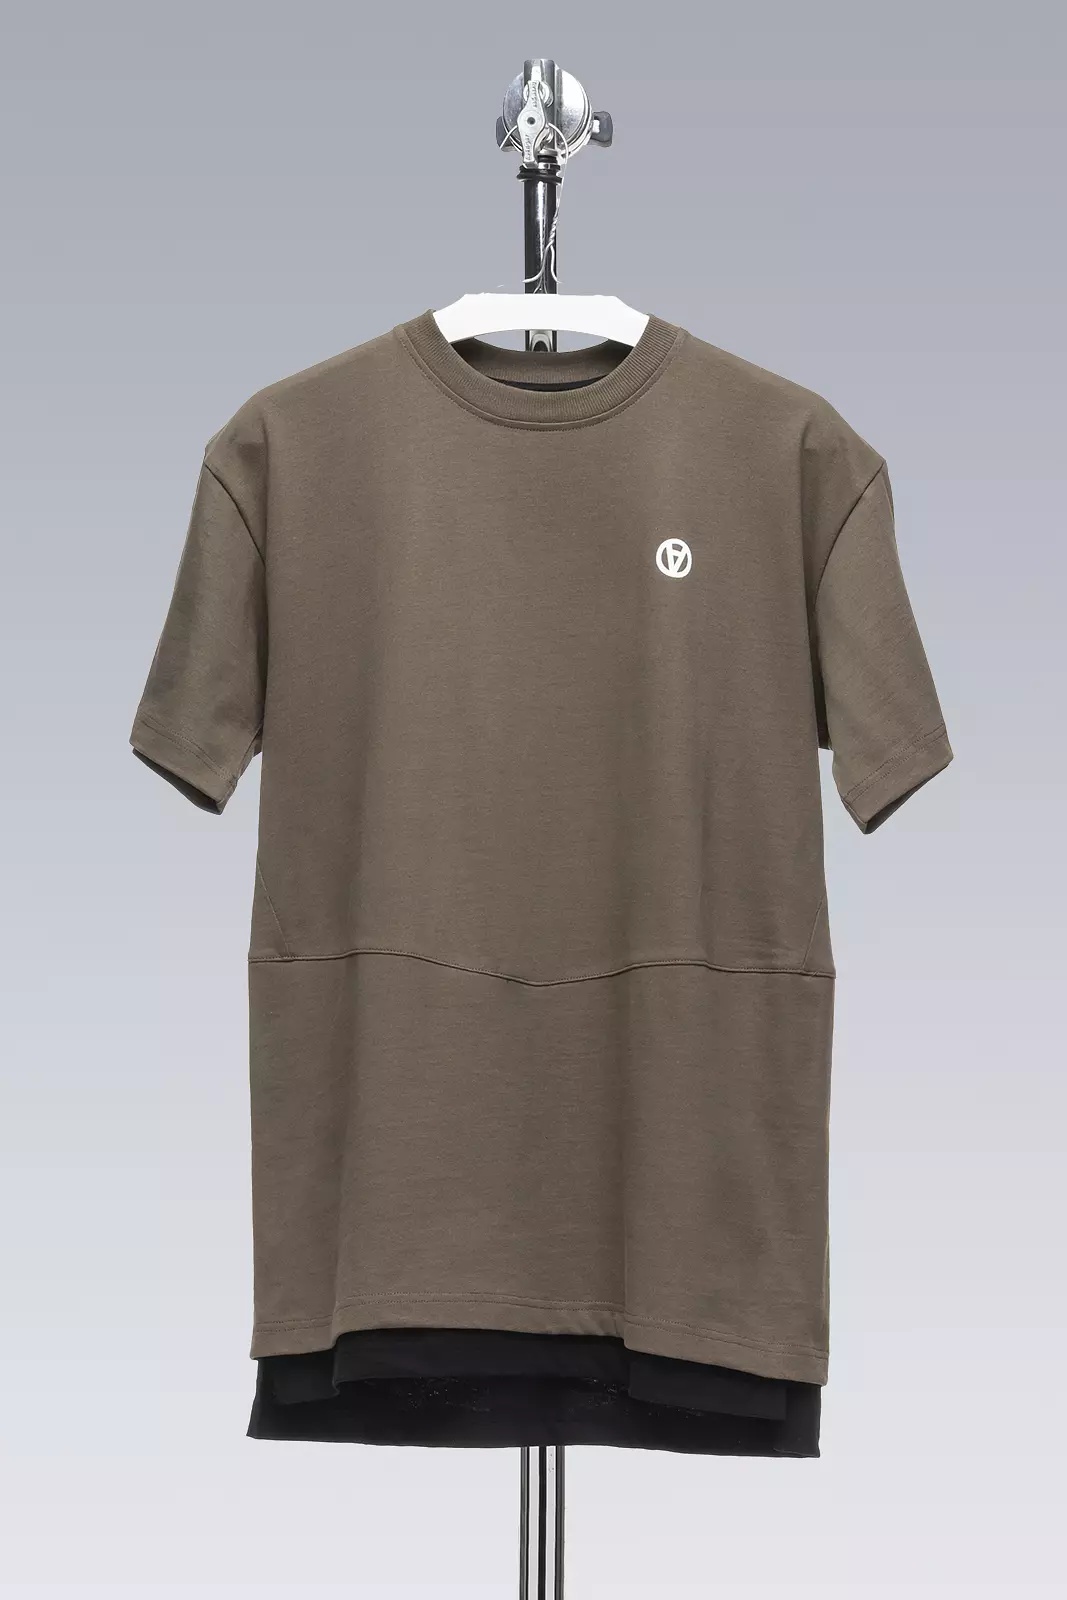 S28-PR-B 100% Organic Cotton Short Sleeve T-shirt Black - 3